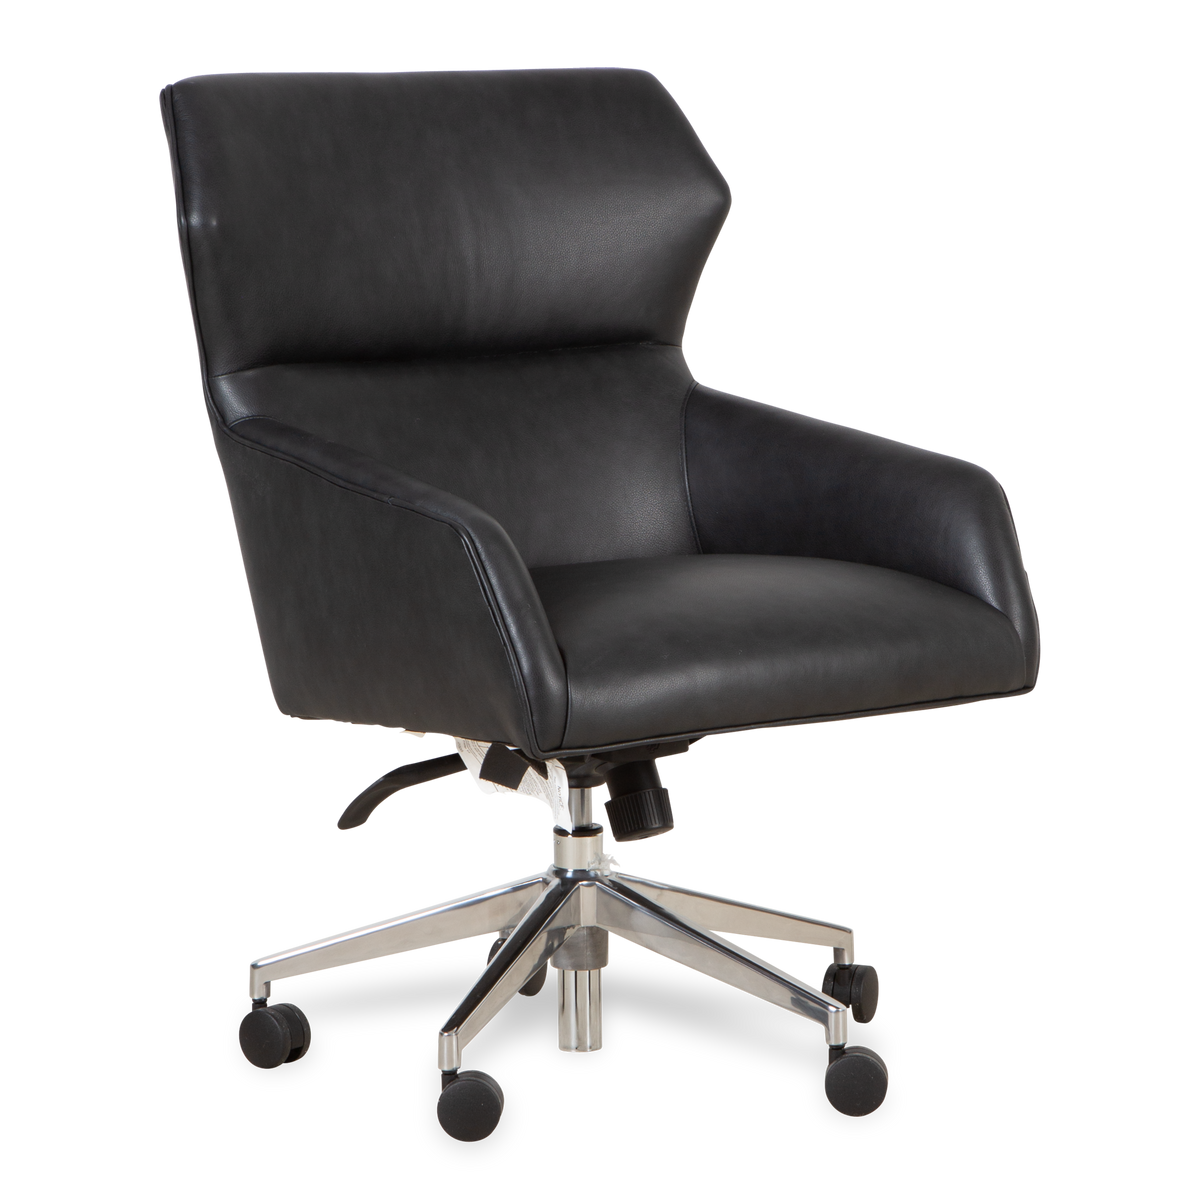 Leon Leather Desk Chair